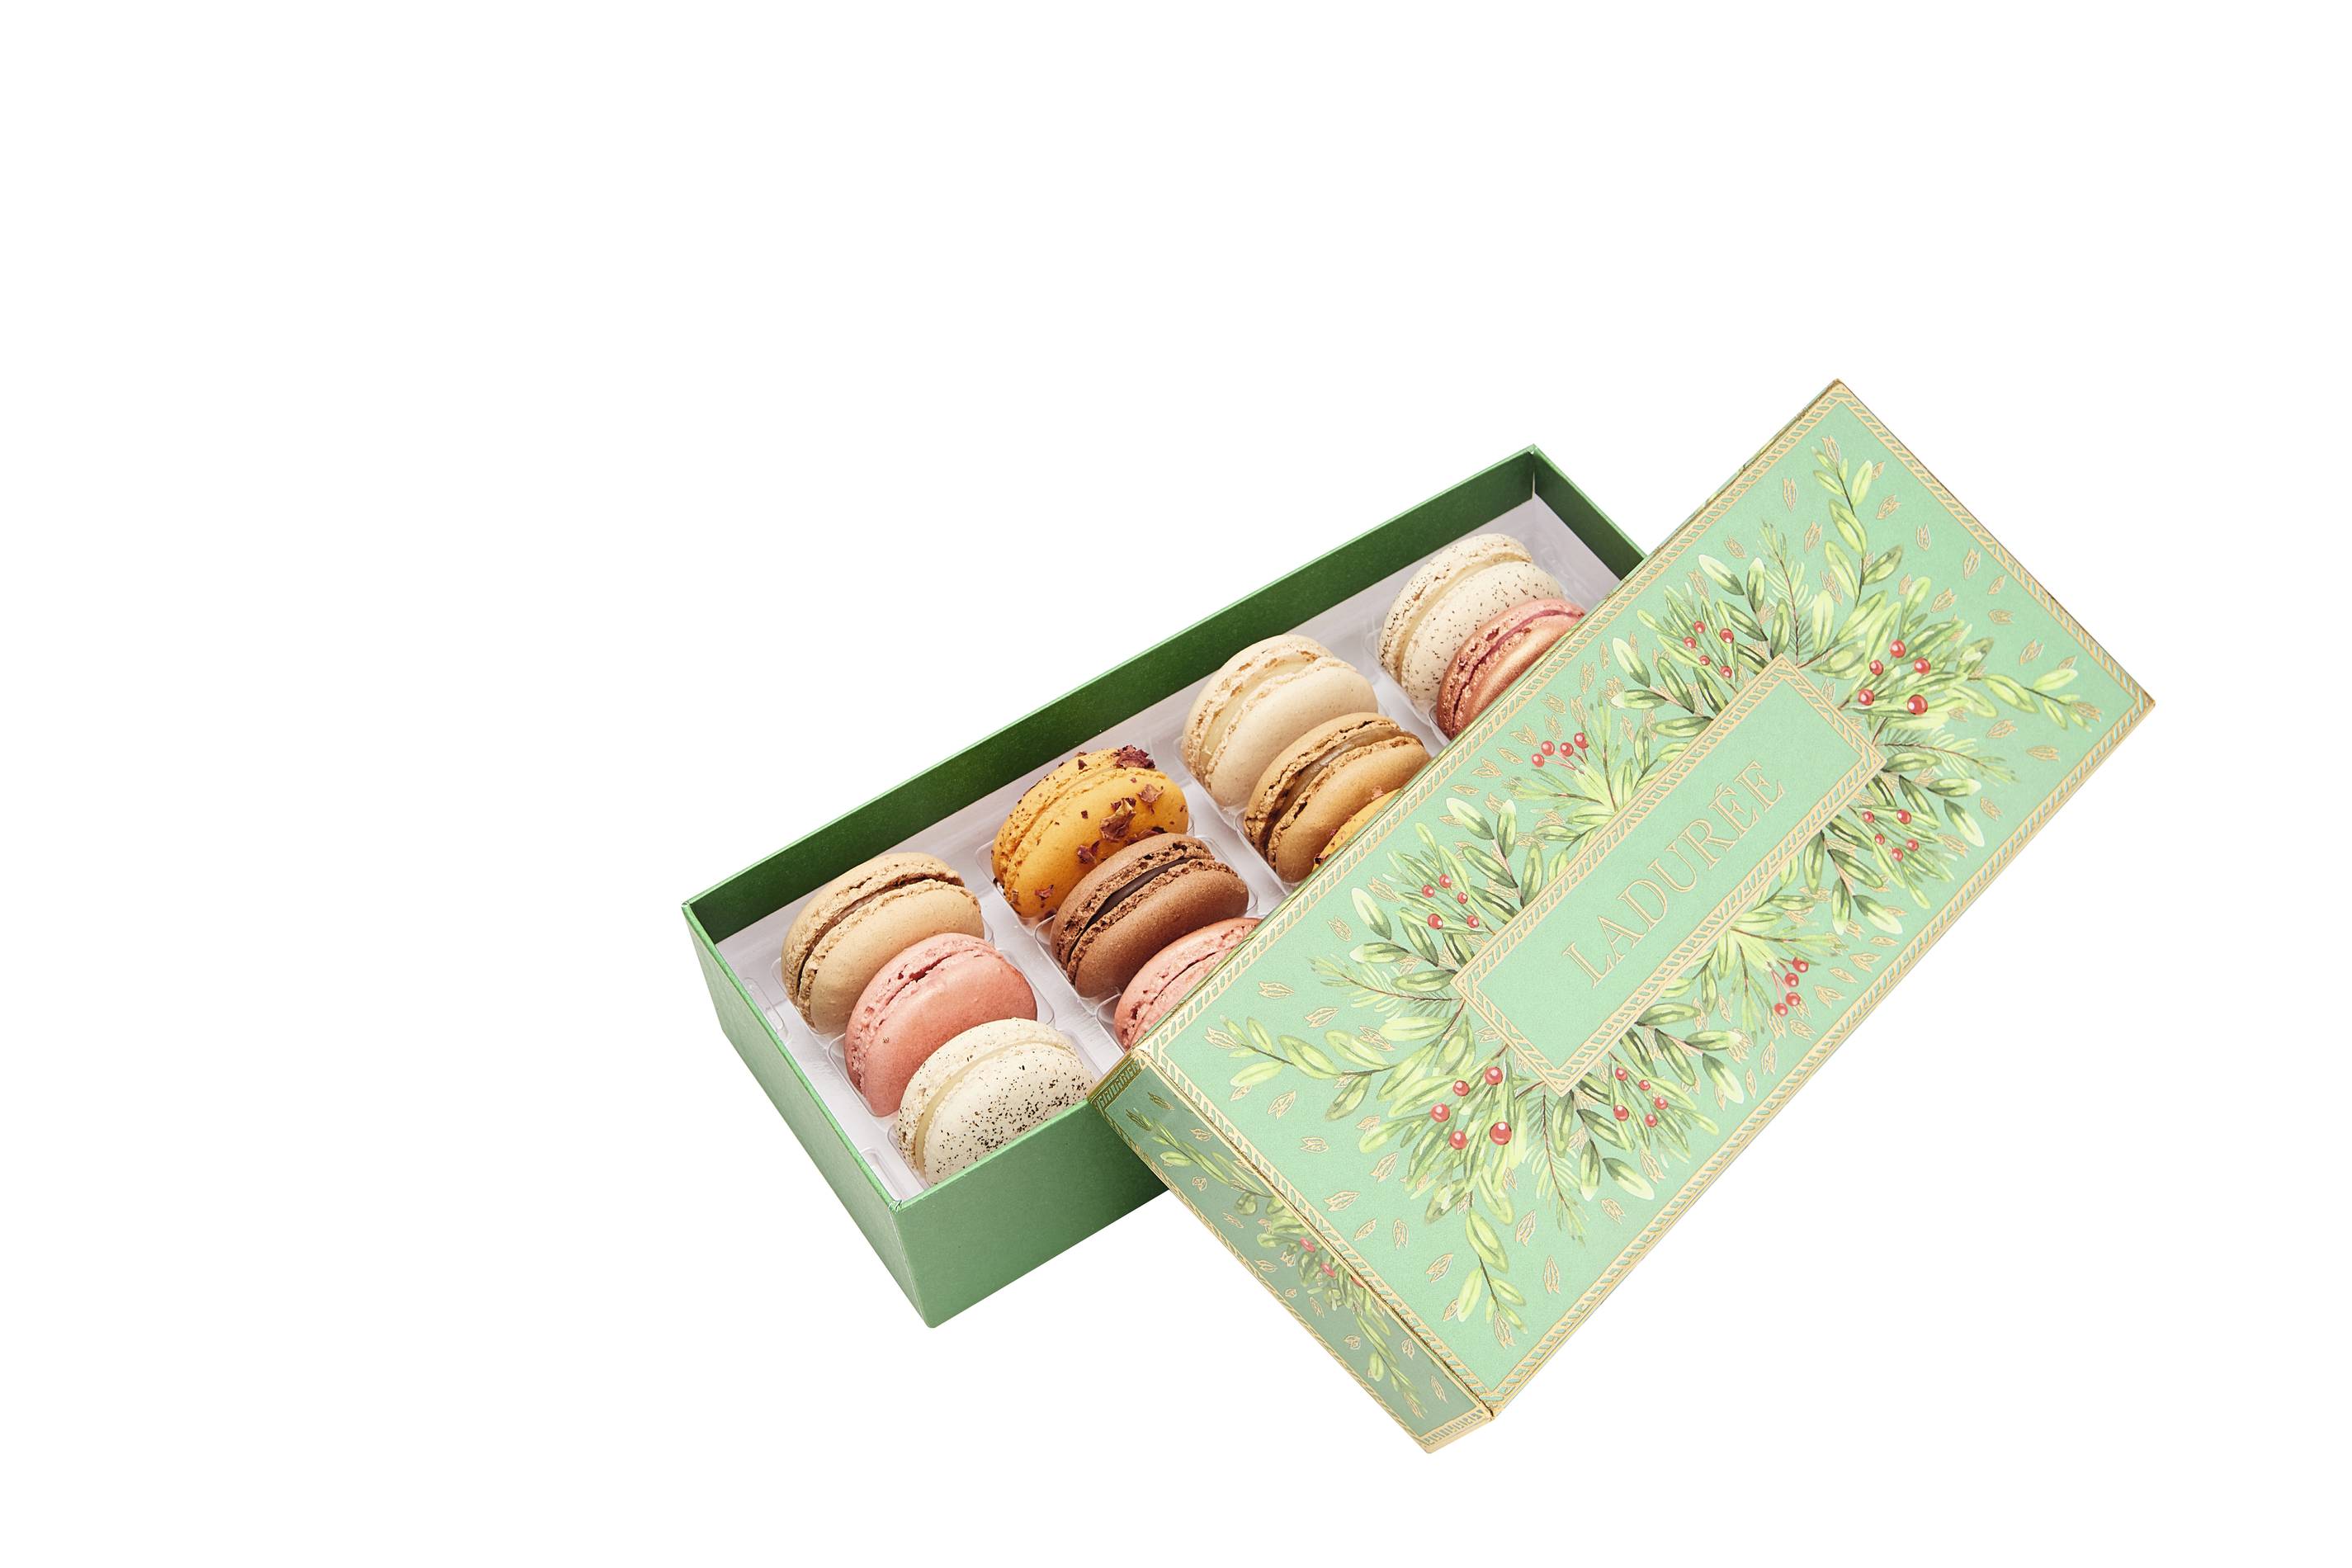 Laduree Holiday Macaron Gift Box Image